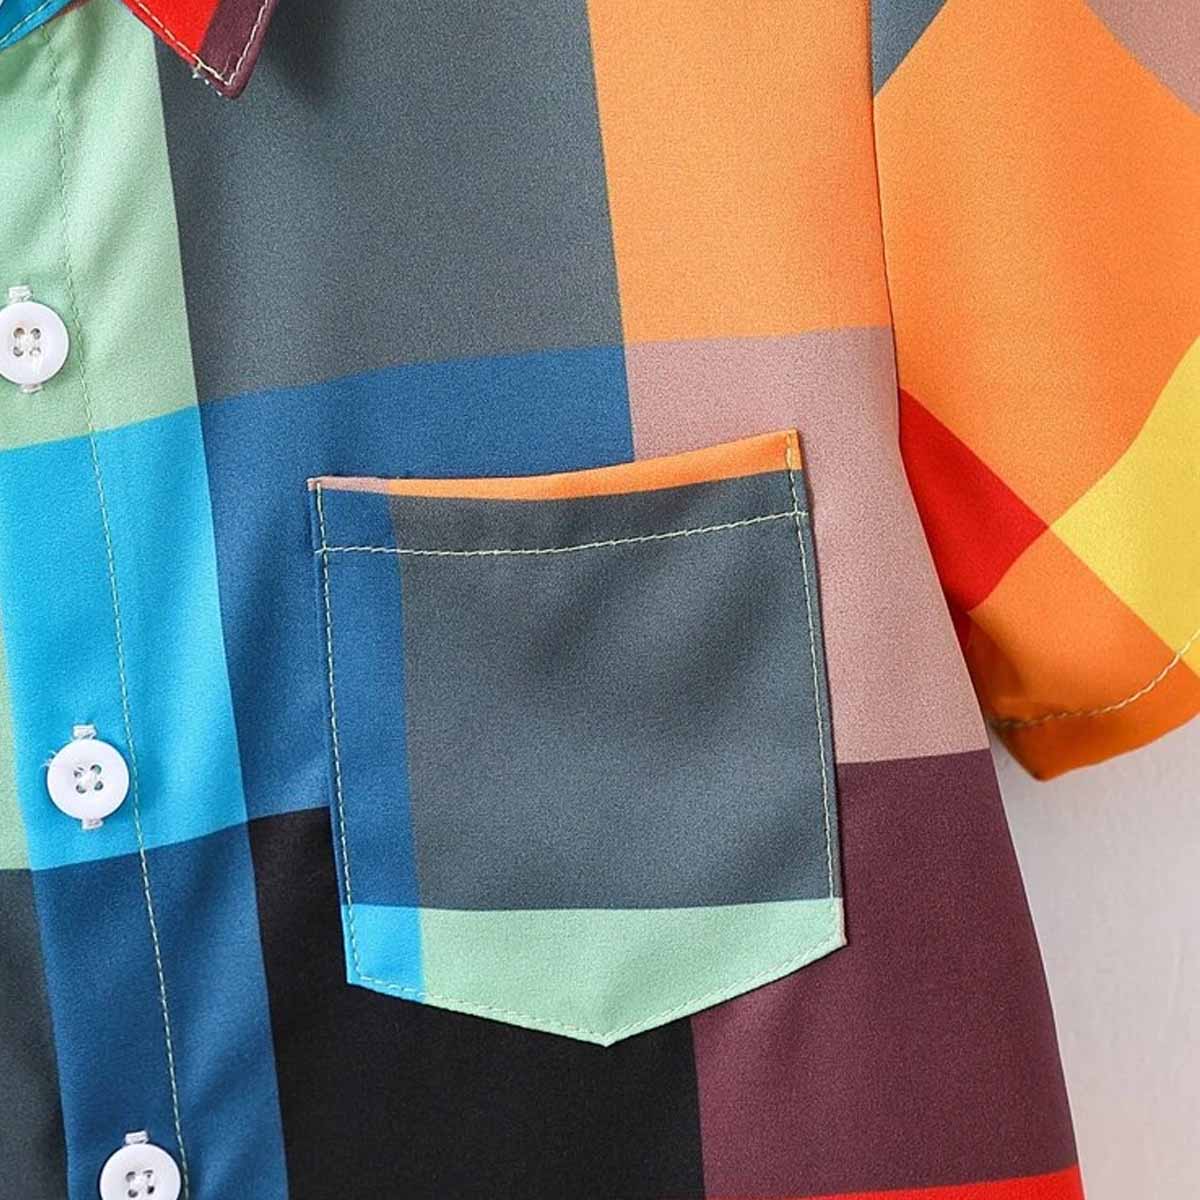 Venutaloza Stylish Colorblock Multicolors Designer Button Front (Combo pack For 5) Shirt For Boys.